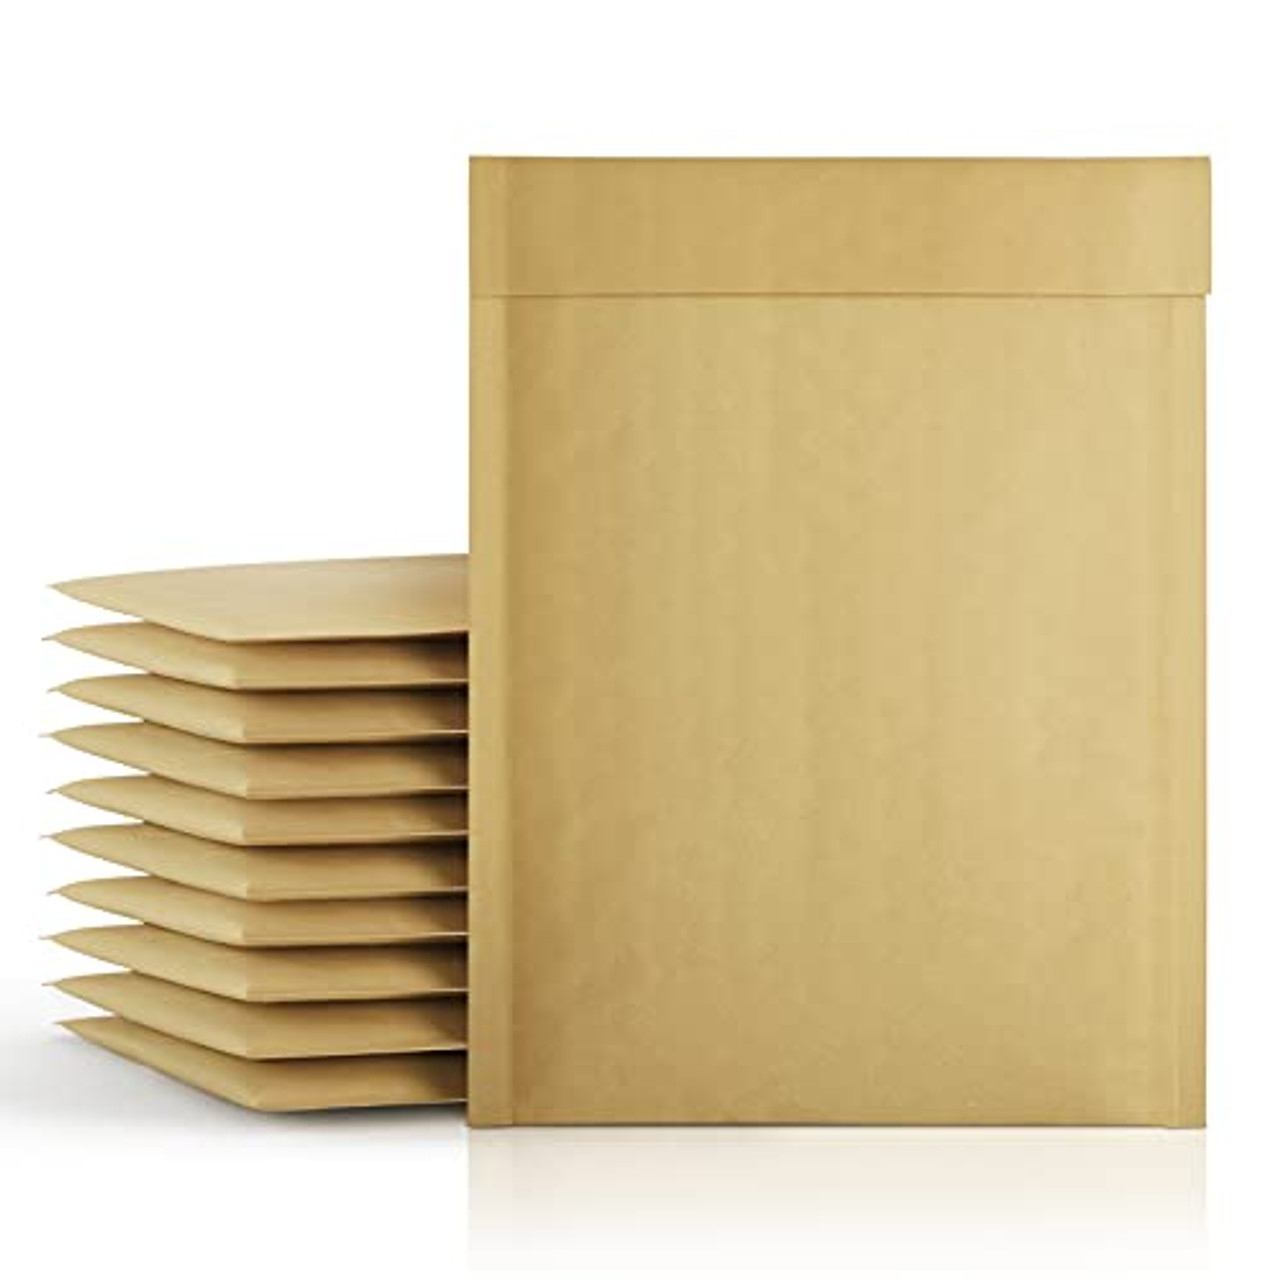 Masterline Padded Envelopes - Size 2 - 240mm x 270mm - 100x Per Pack